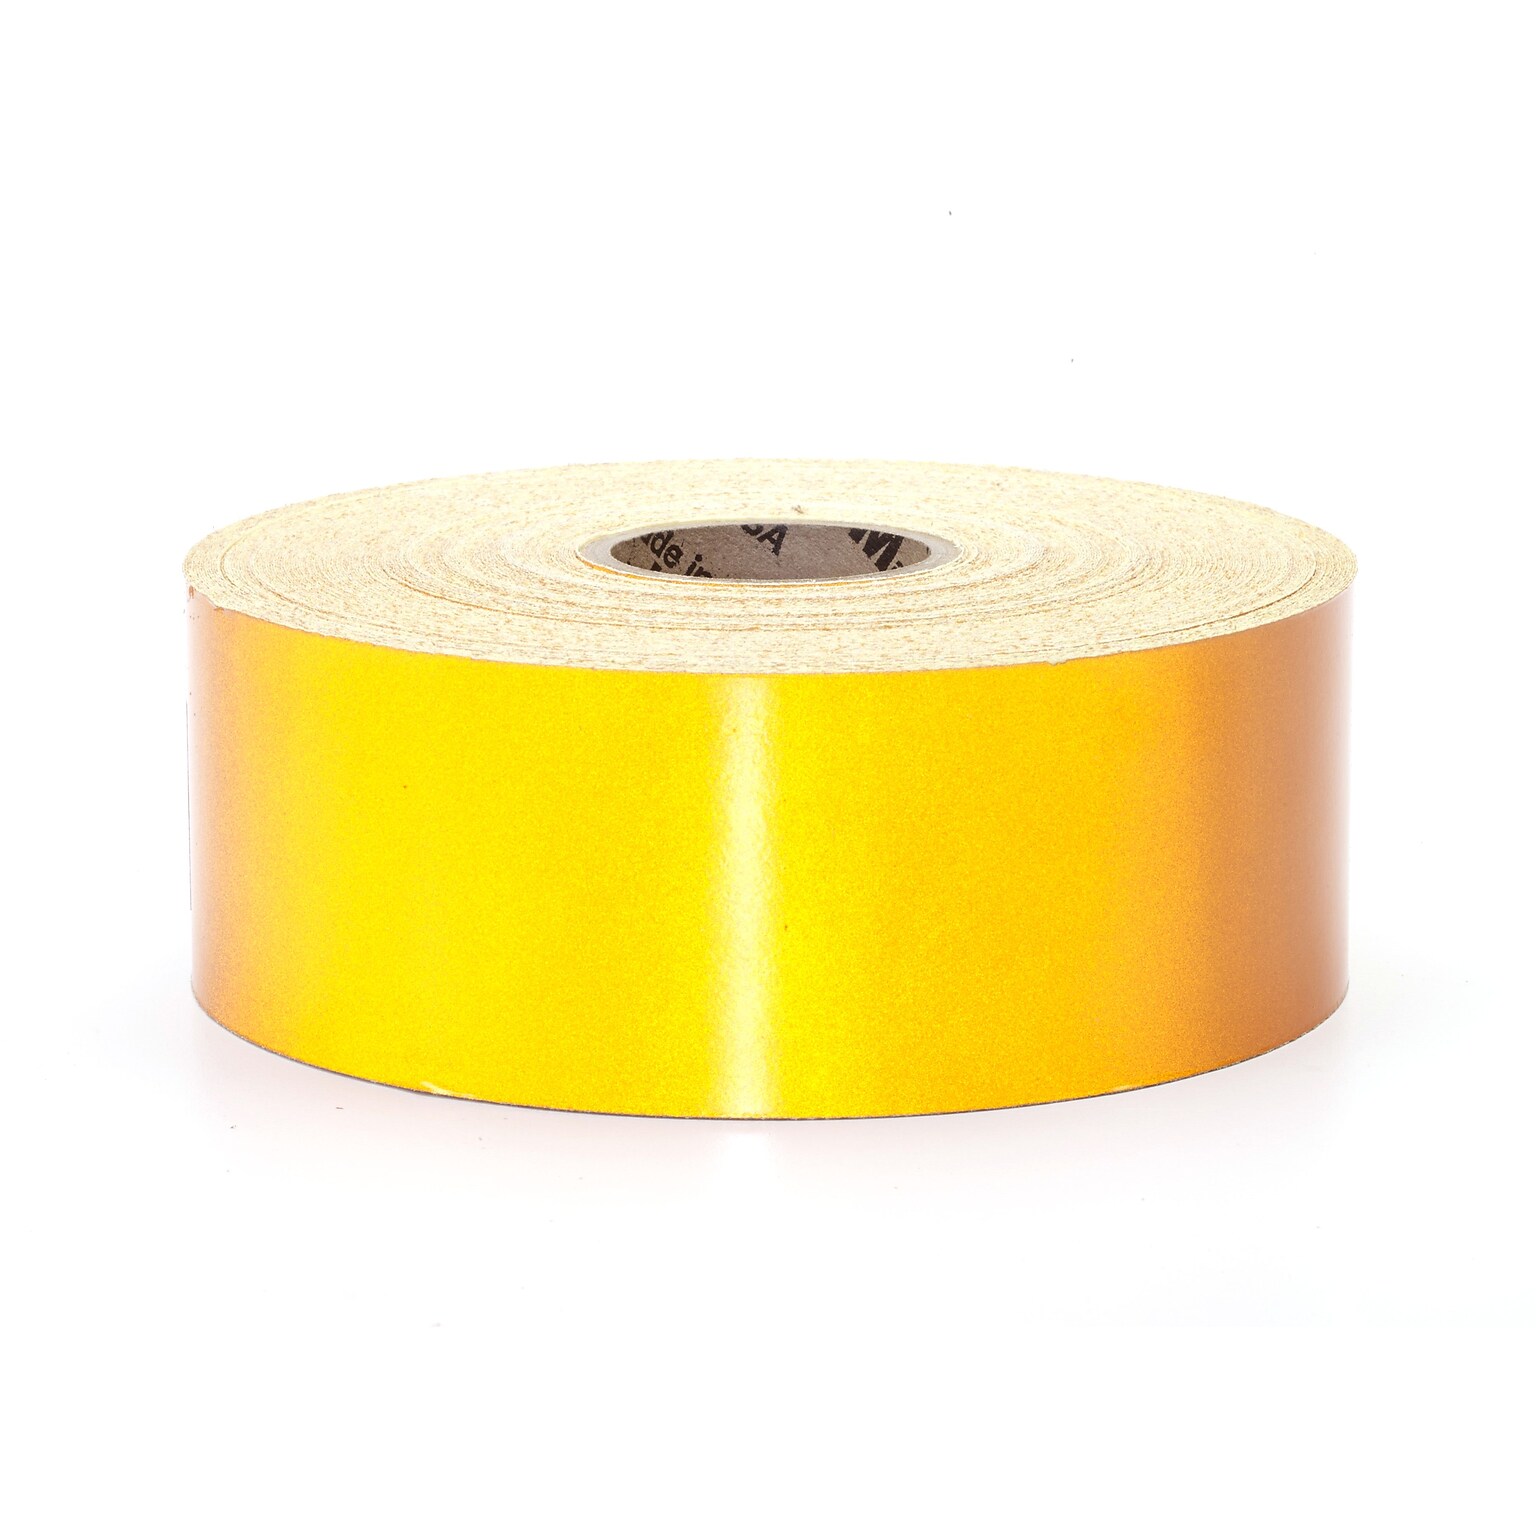 Mutual Industries Pressure Sensitive Retro Reflective Tape, 2 x 50 yds., Yellow (17786-41-2000)